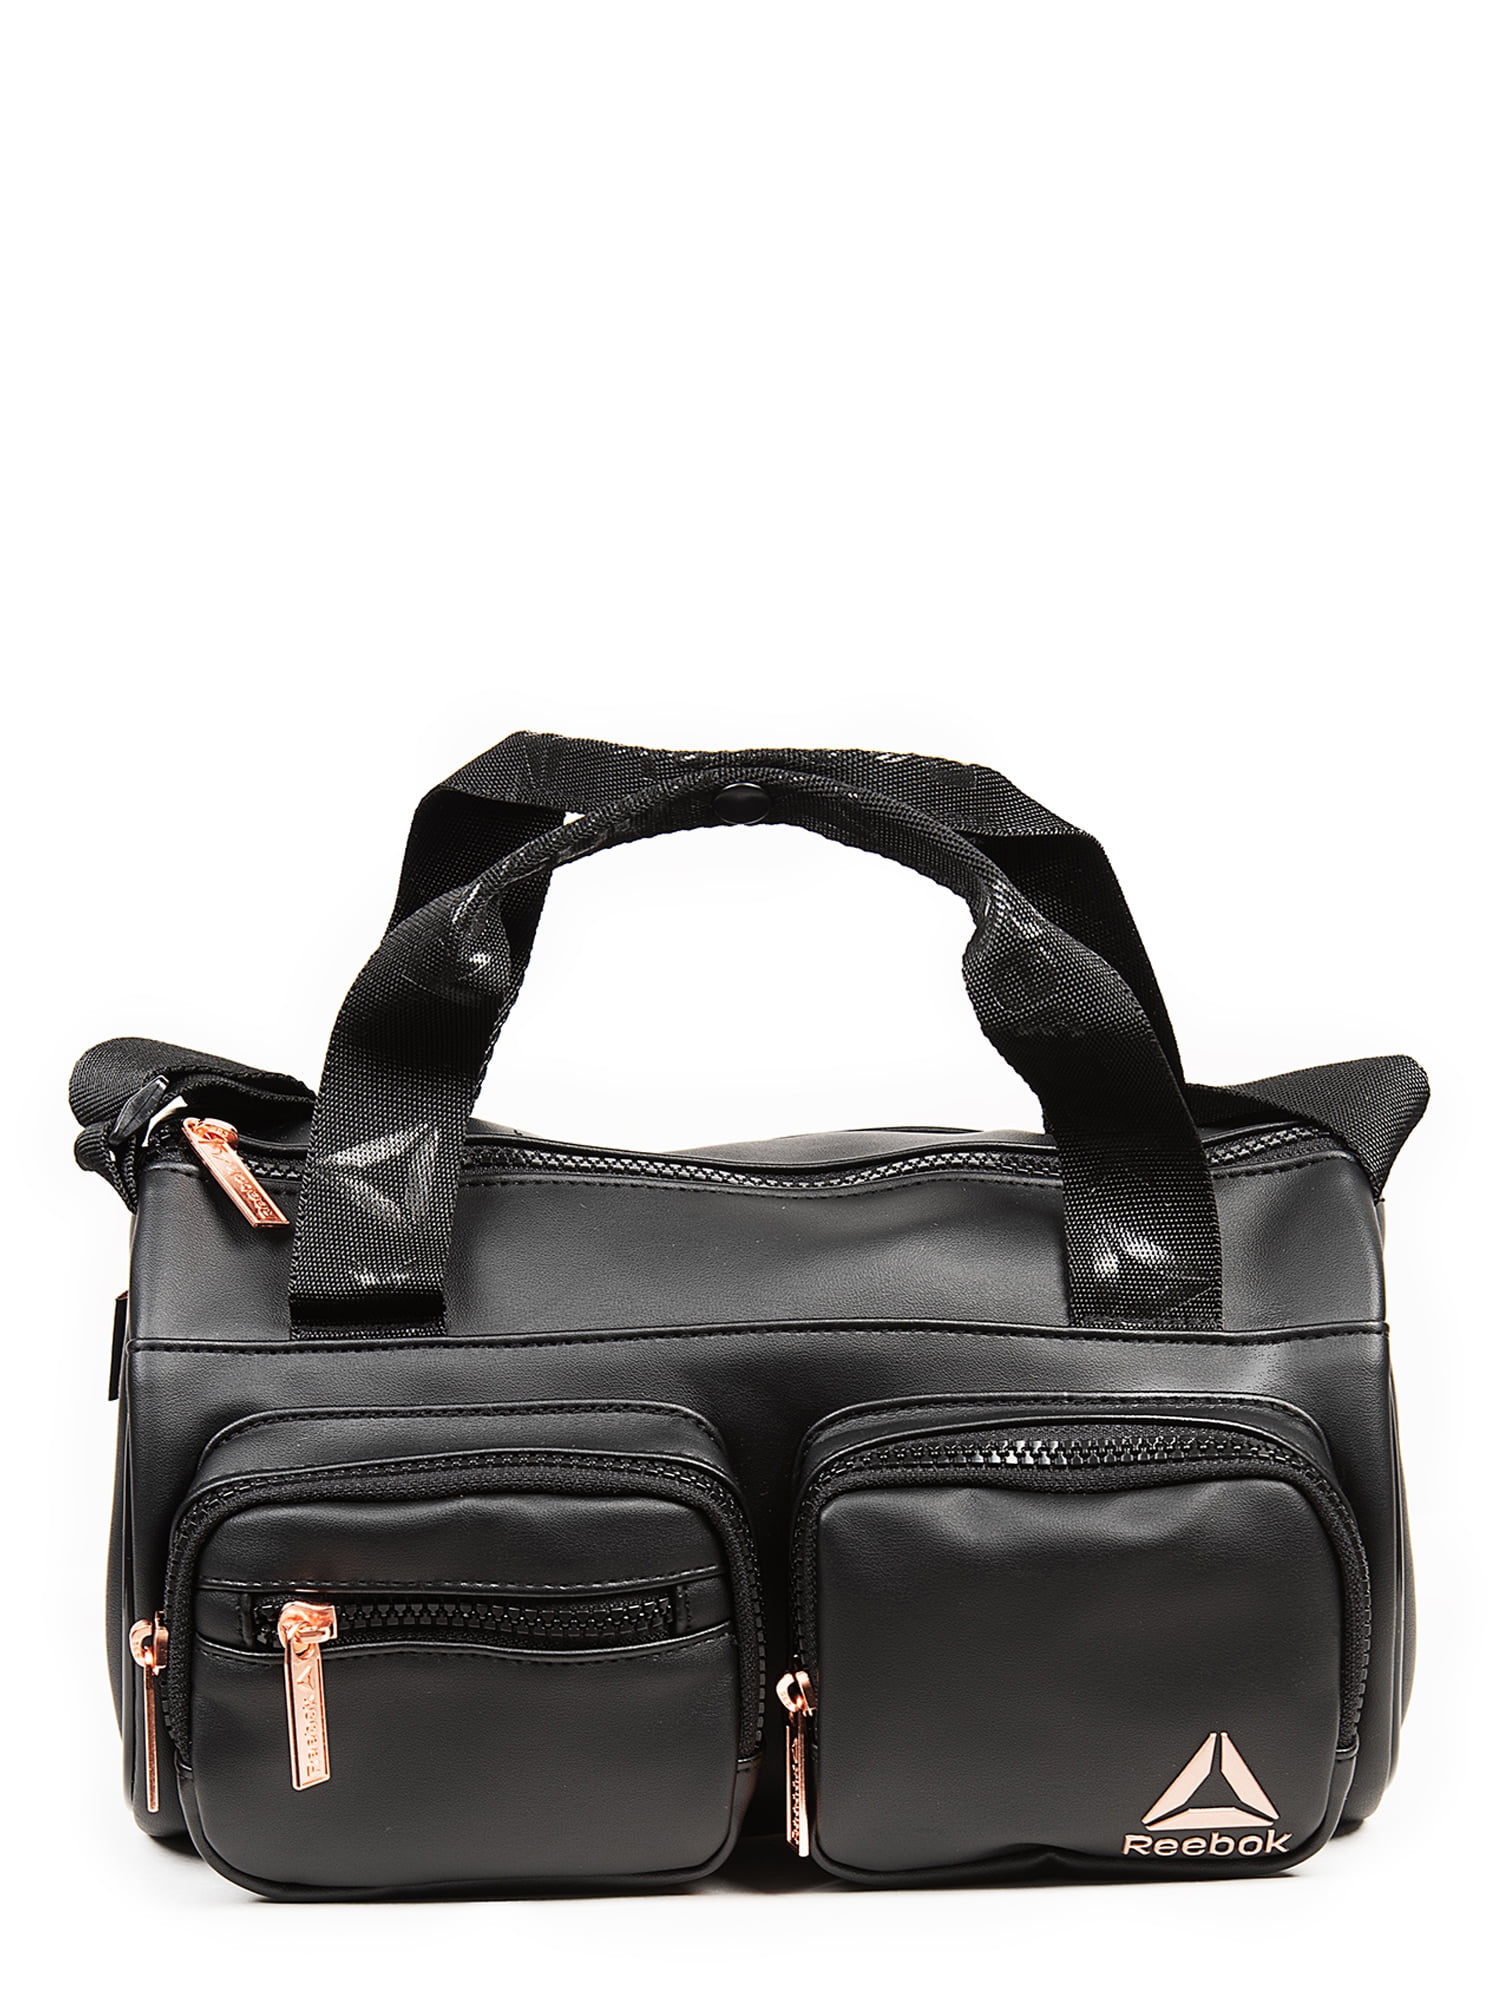 Reebok Women's Matilda Unisex Duffel Handbag Black